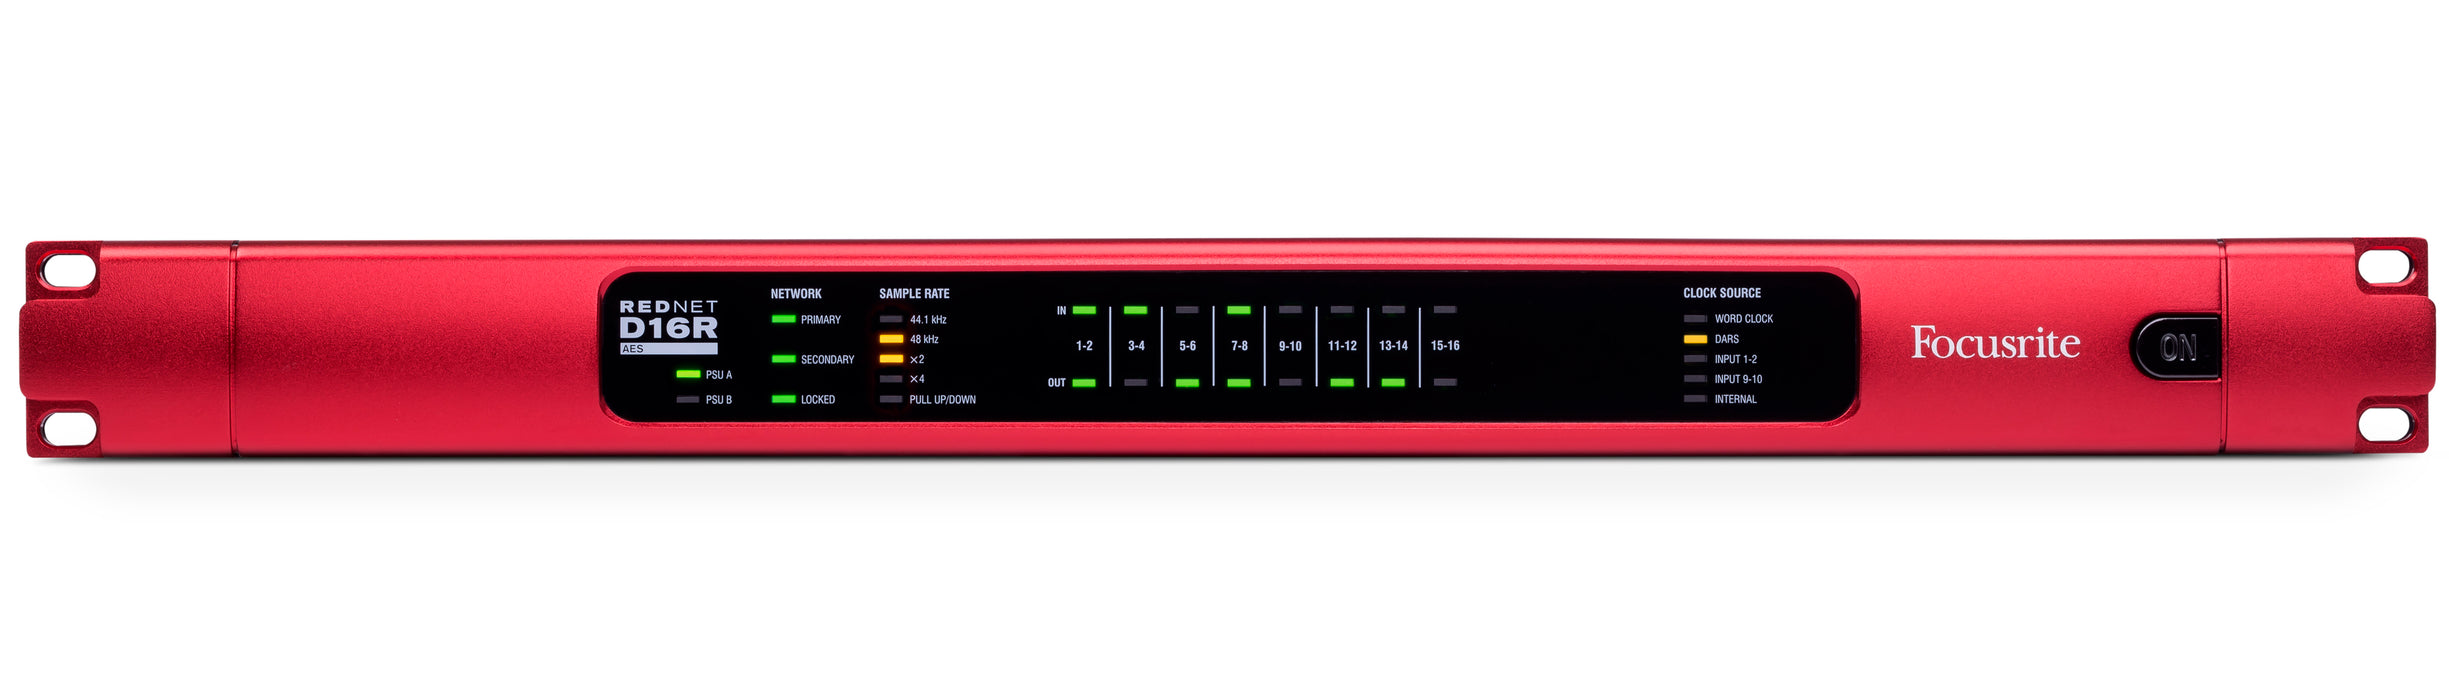 Focusrite REDNET D16R - Interfaz de audio sobre IP Dante